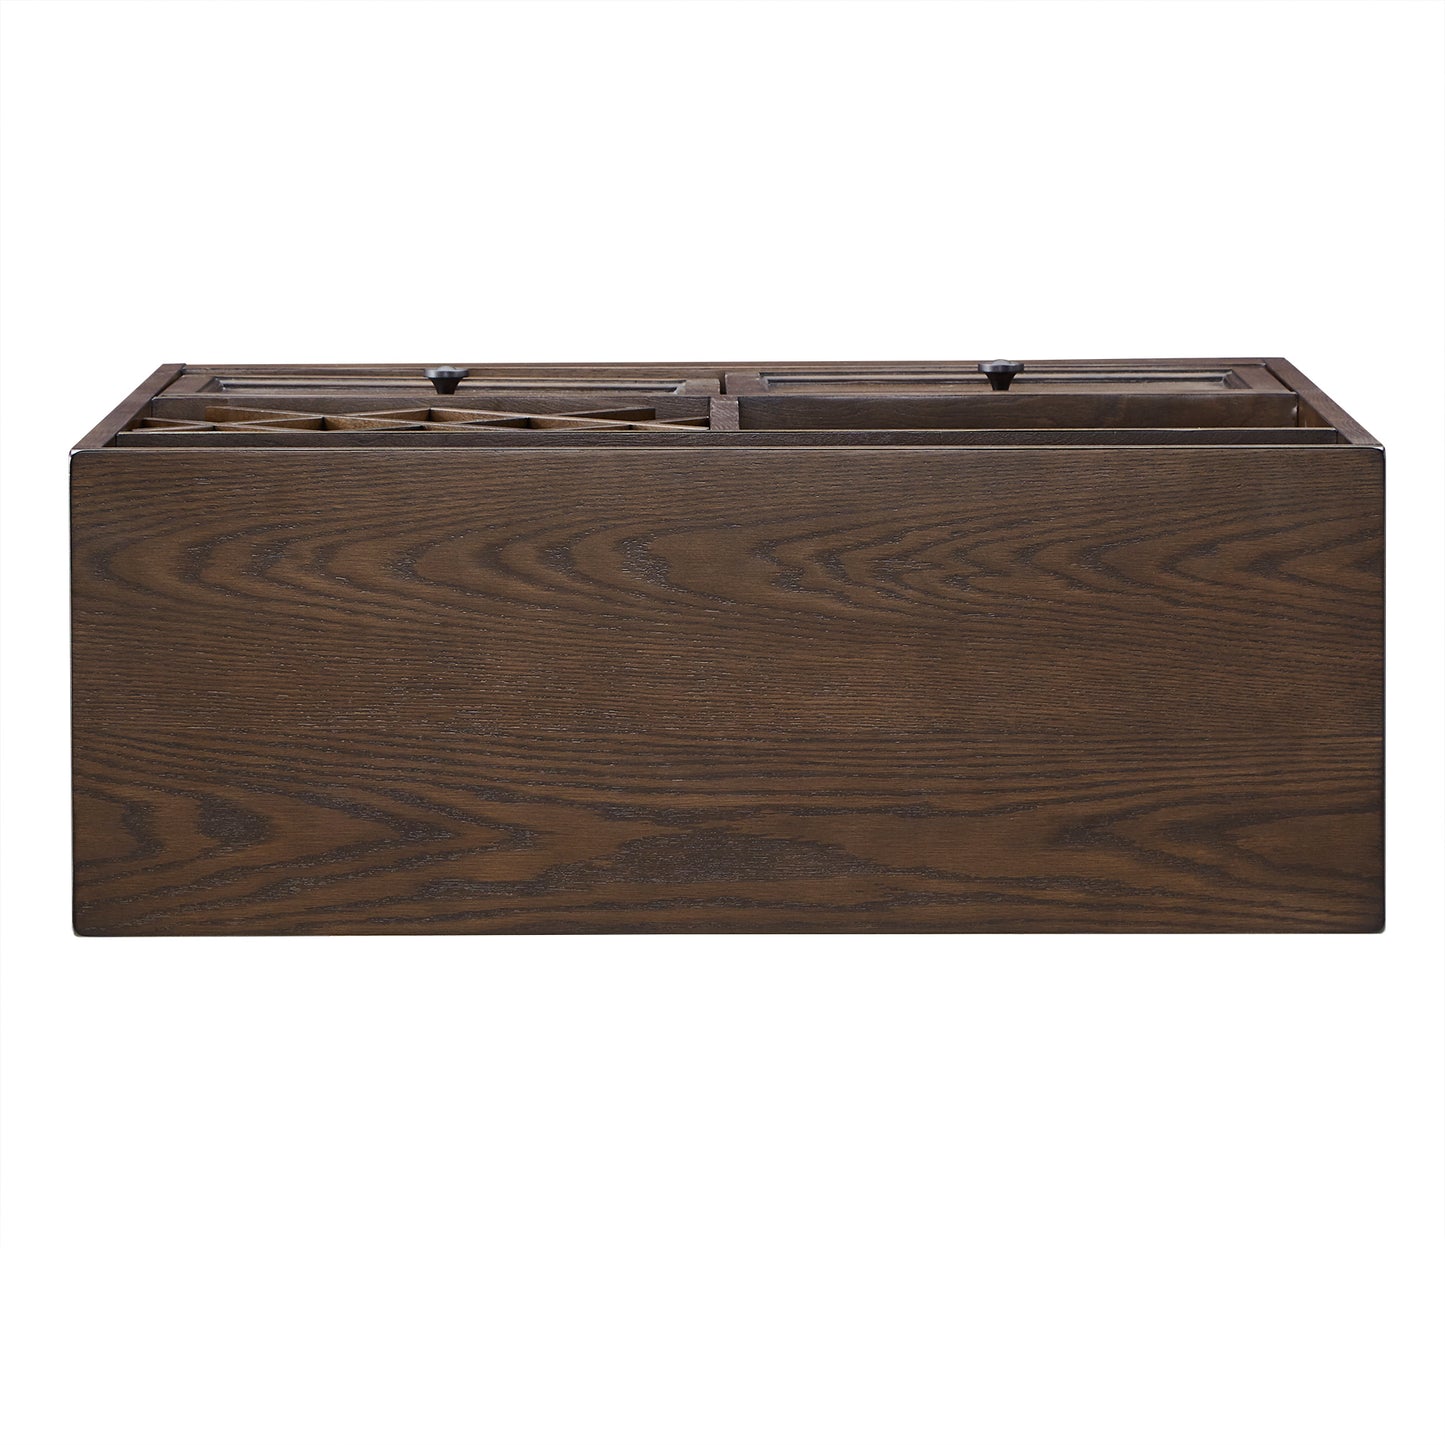 Dark Oak Finish Wood Cabinet - With Wine Rack